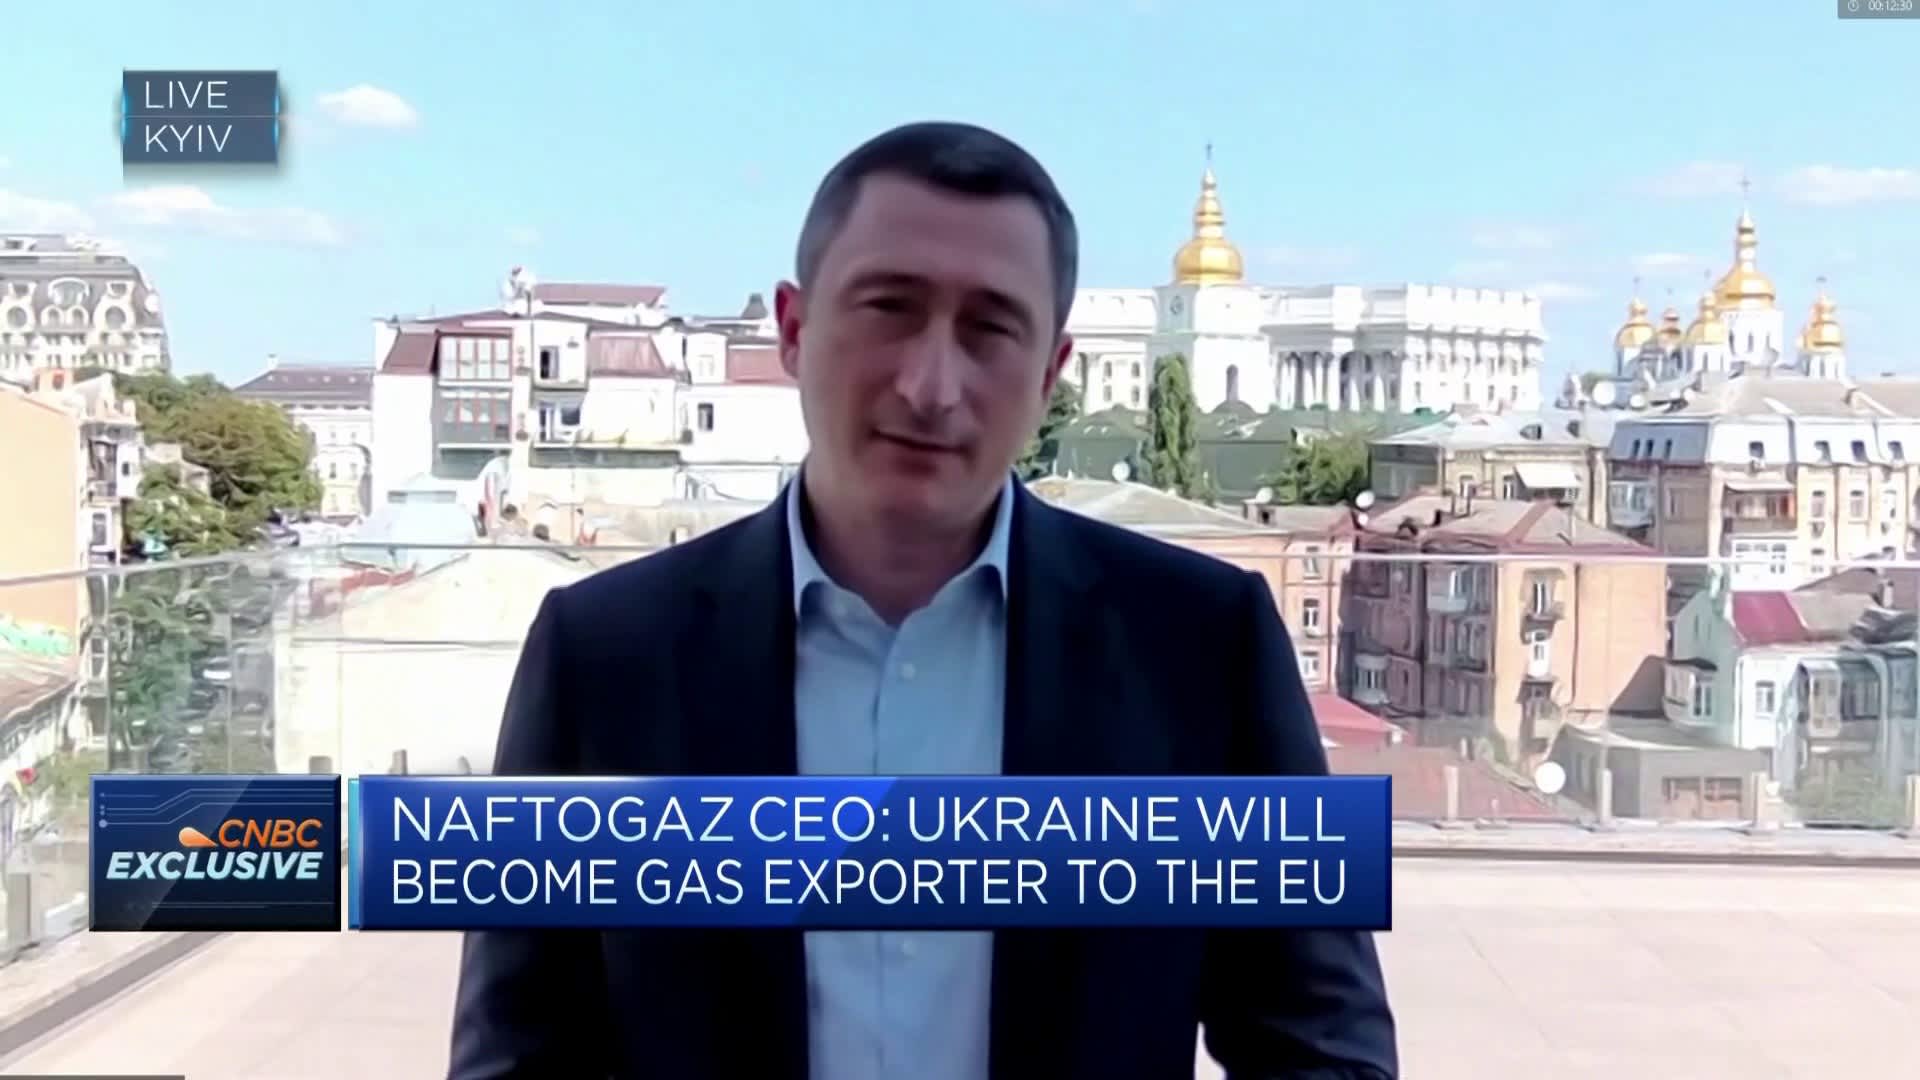 Naftogaz CEO: We should discuss Russian gas transit deal with EU